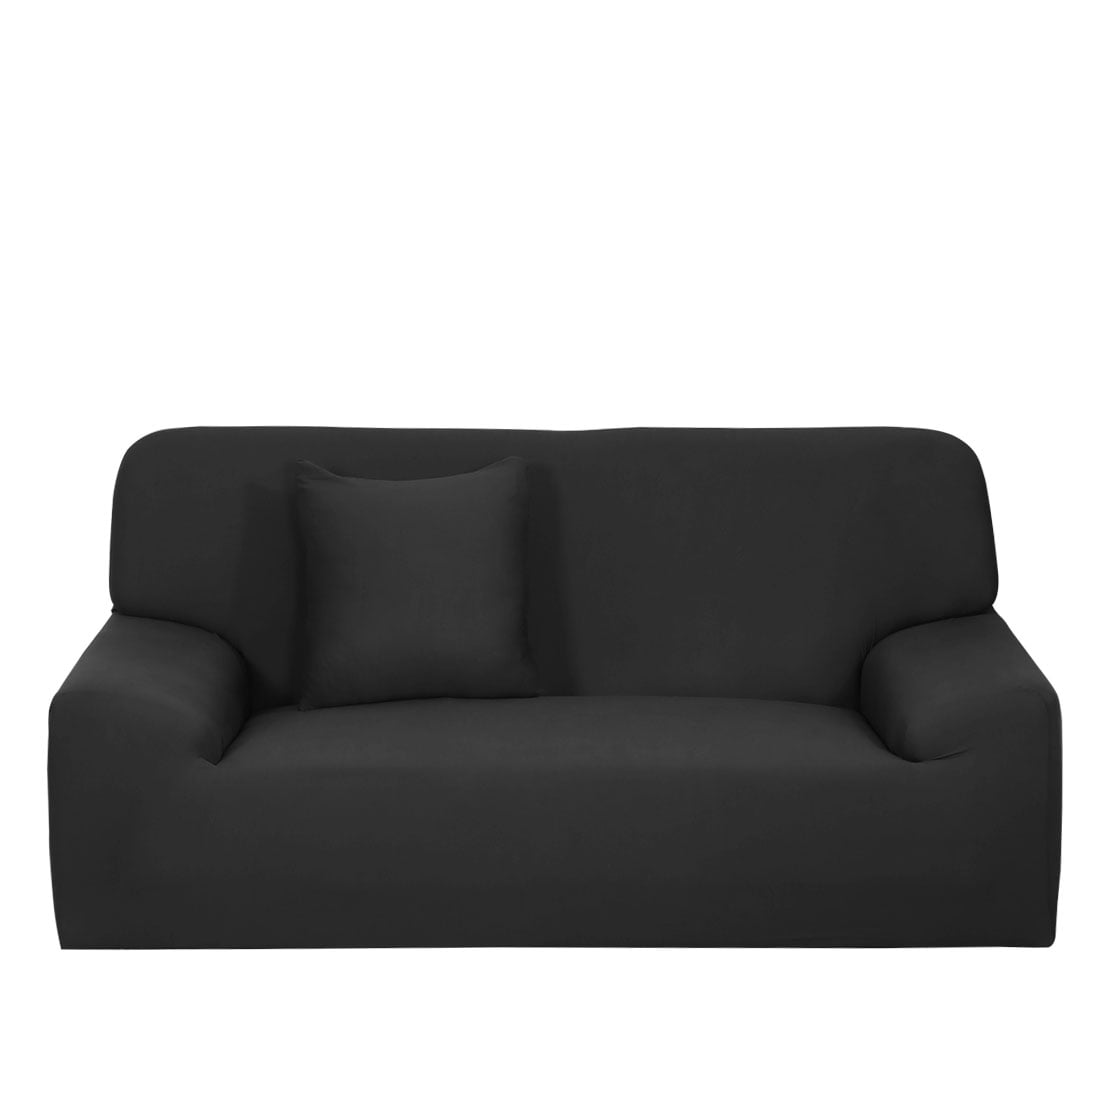 Supertough Polyethylene in Green W1276 Garland Companion Chair Love Seat Cover 